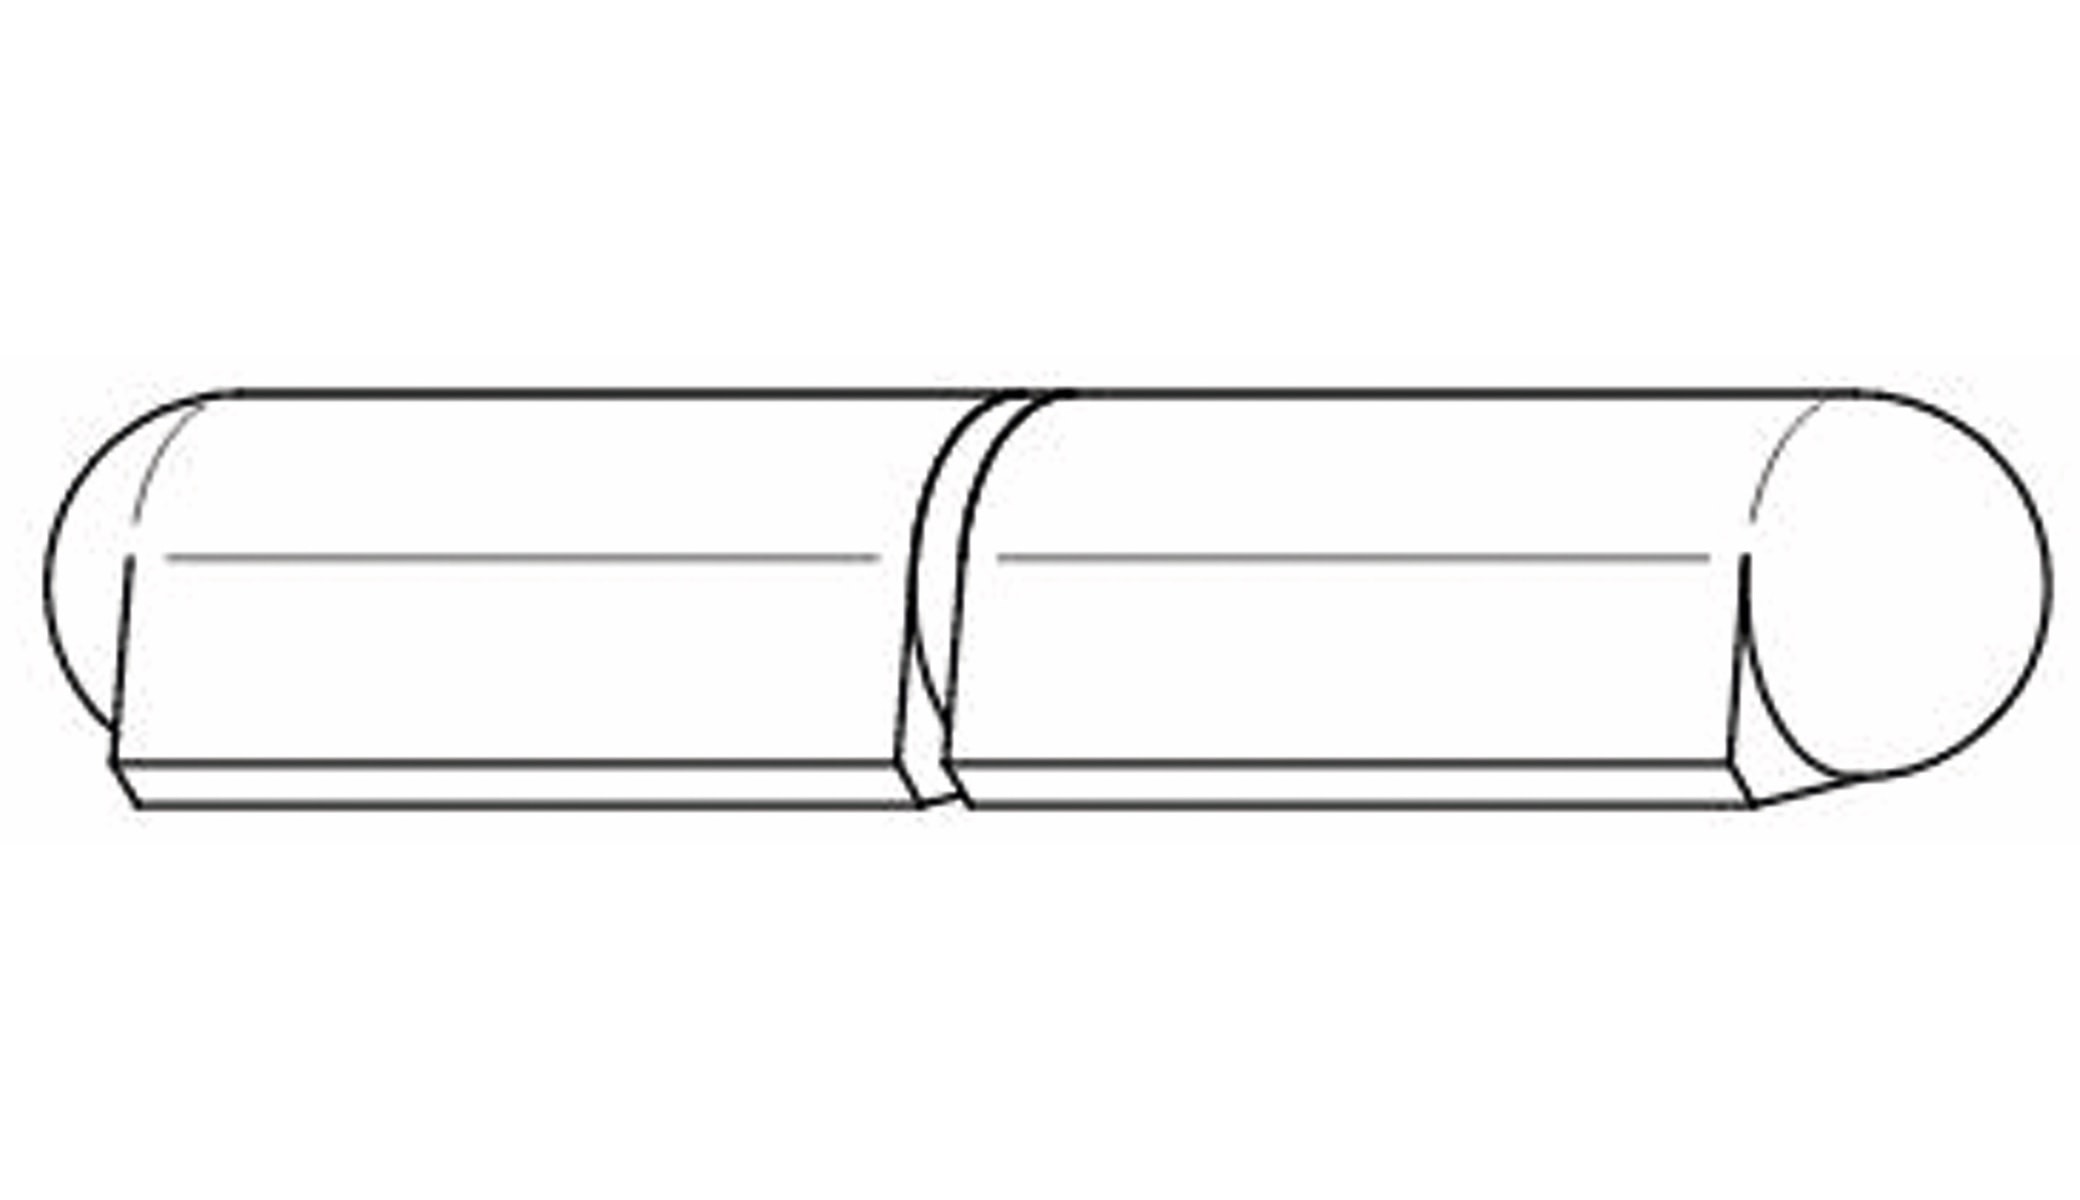 Bandrolle, Anschweißscharnier, 120x16 mm, 2-teilig, Stahl